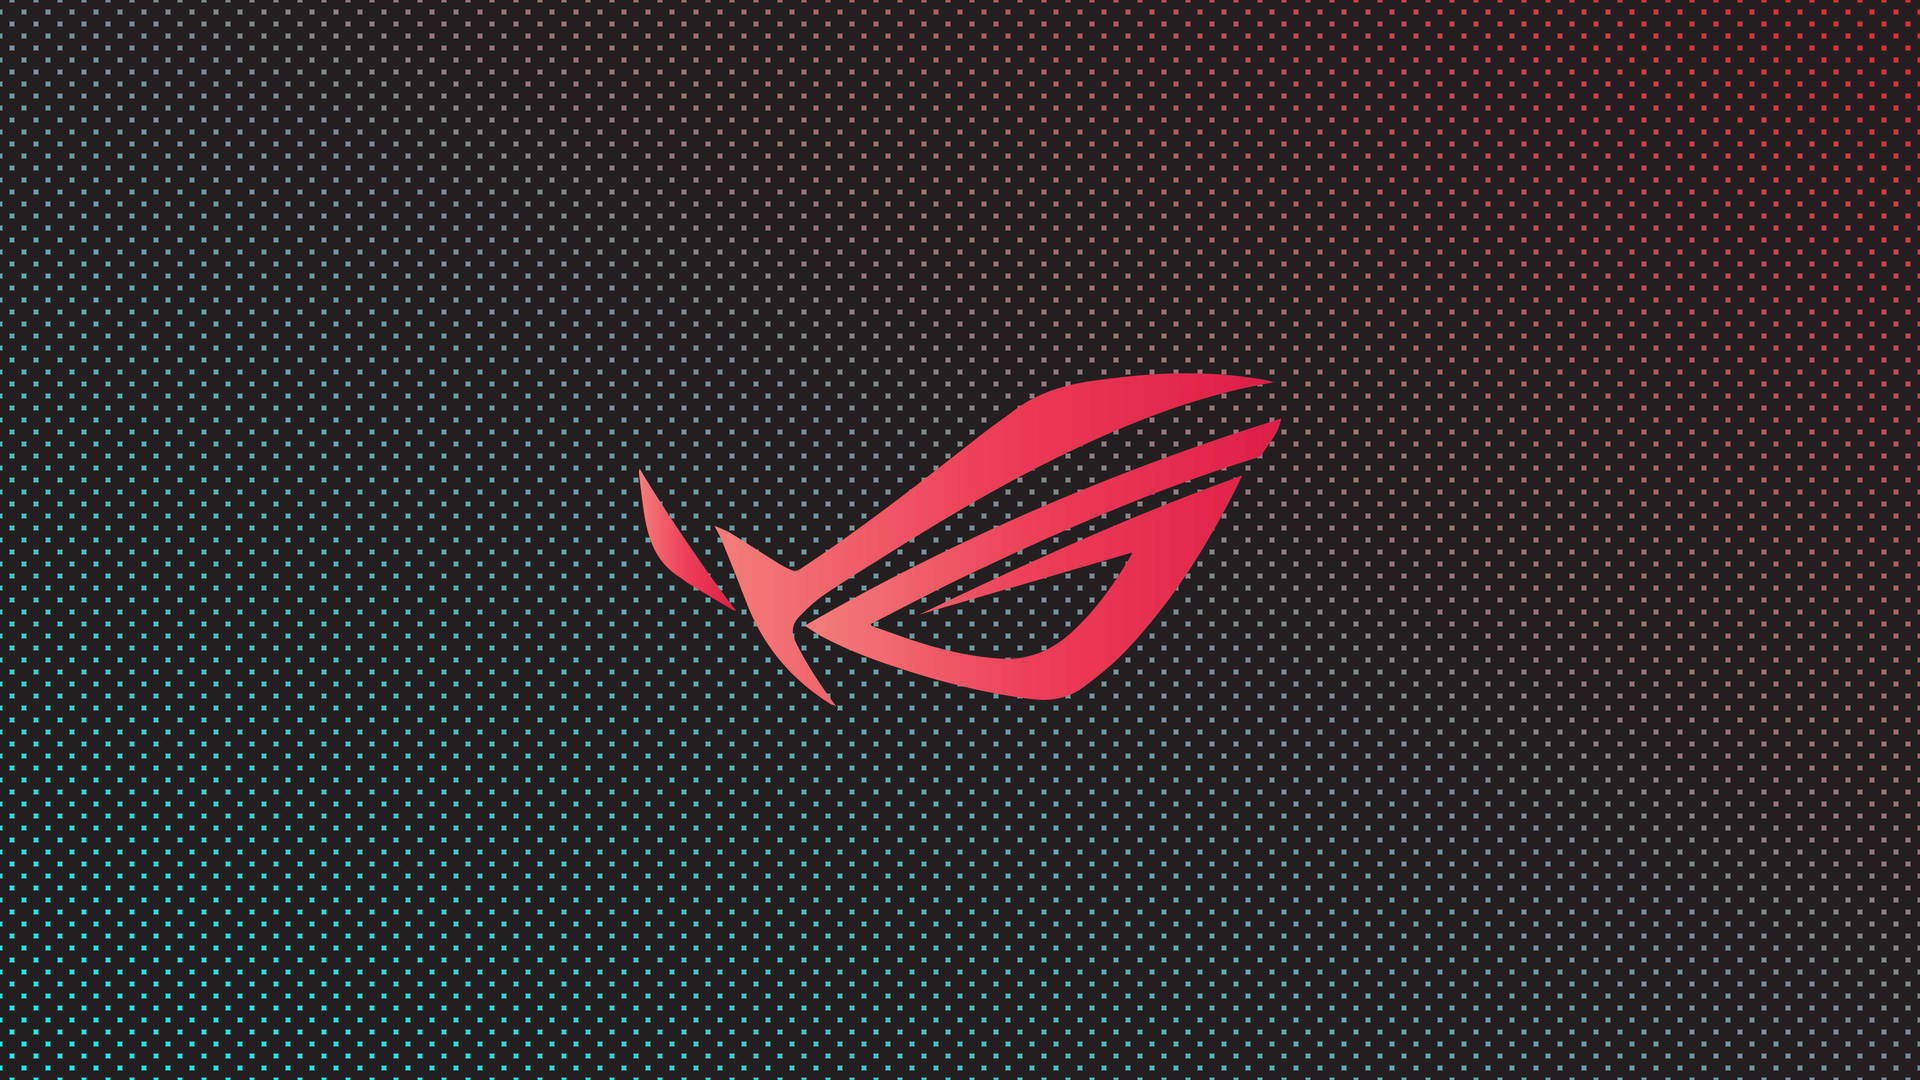 Red Rog Gaming Logo Hd Background